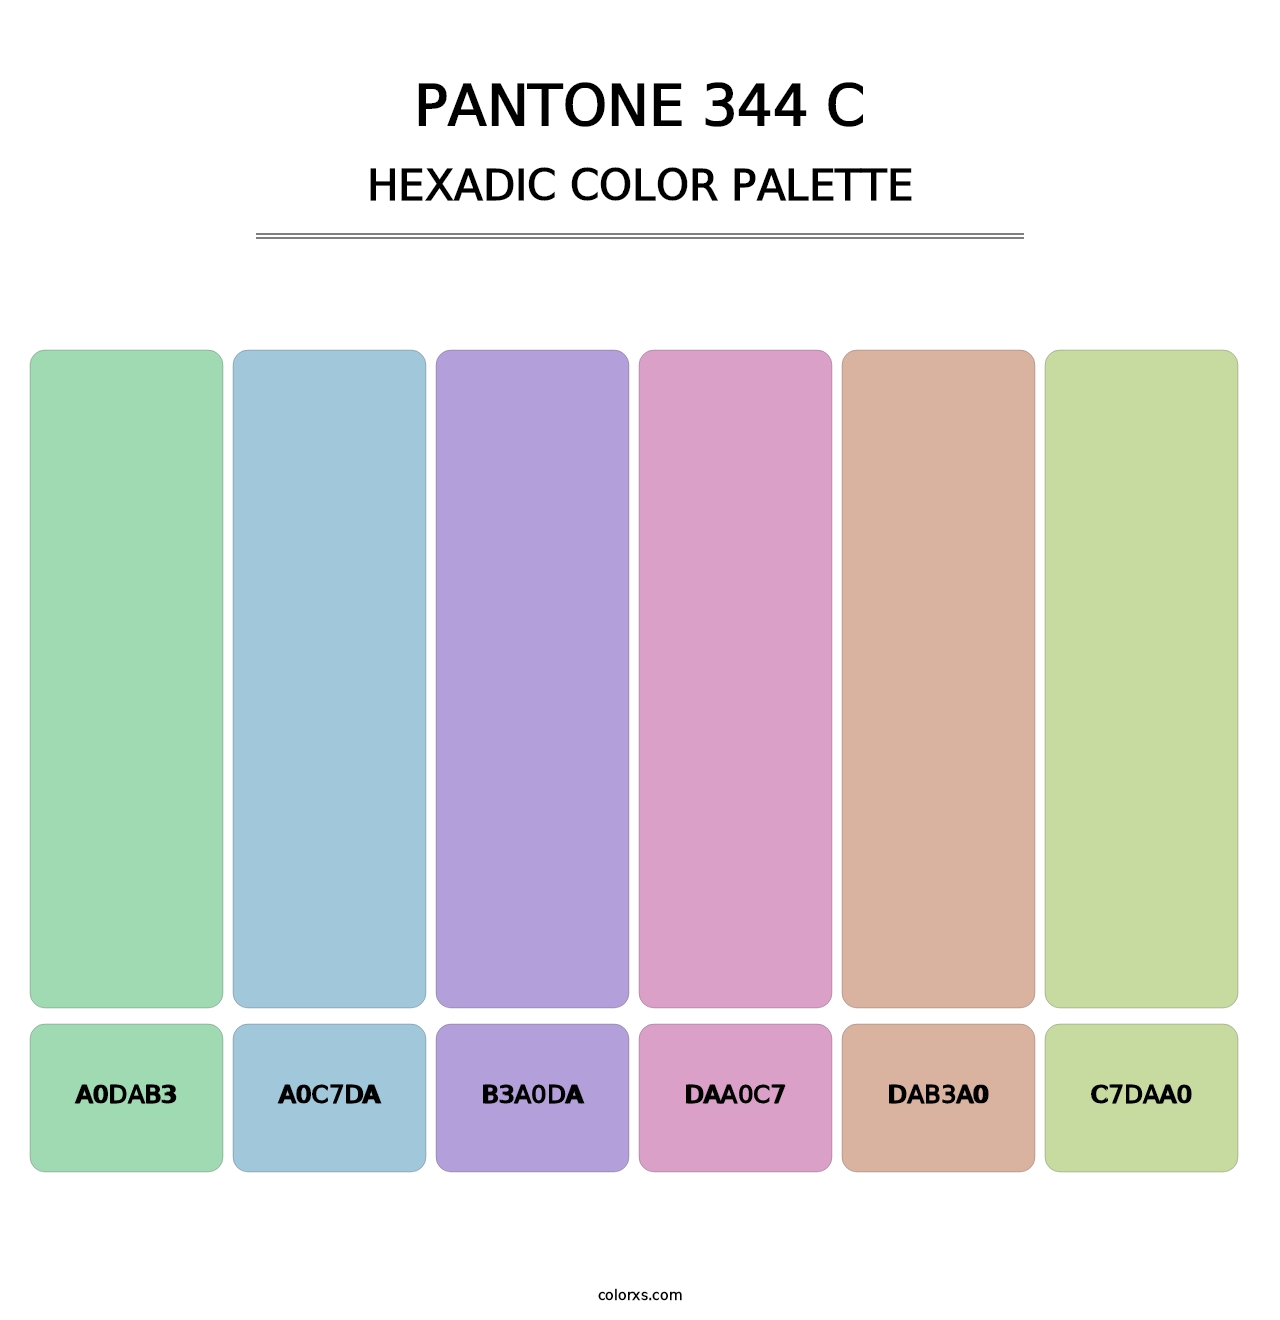 PANTONE 344 C - Hexadic Color Palette